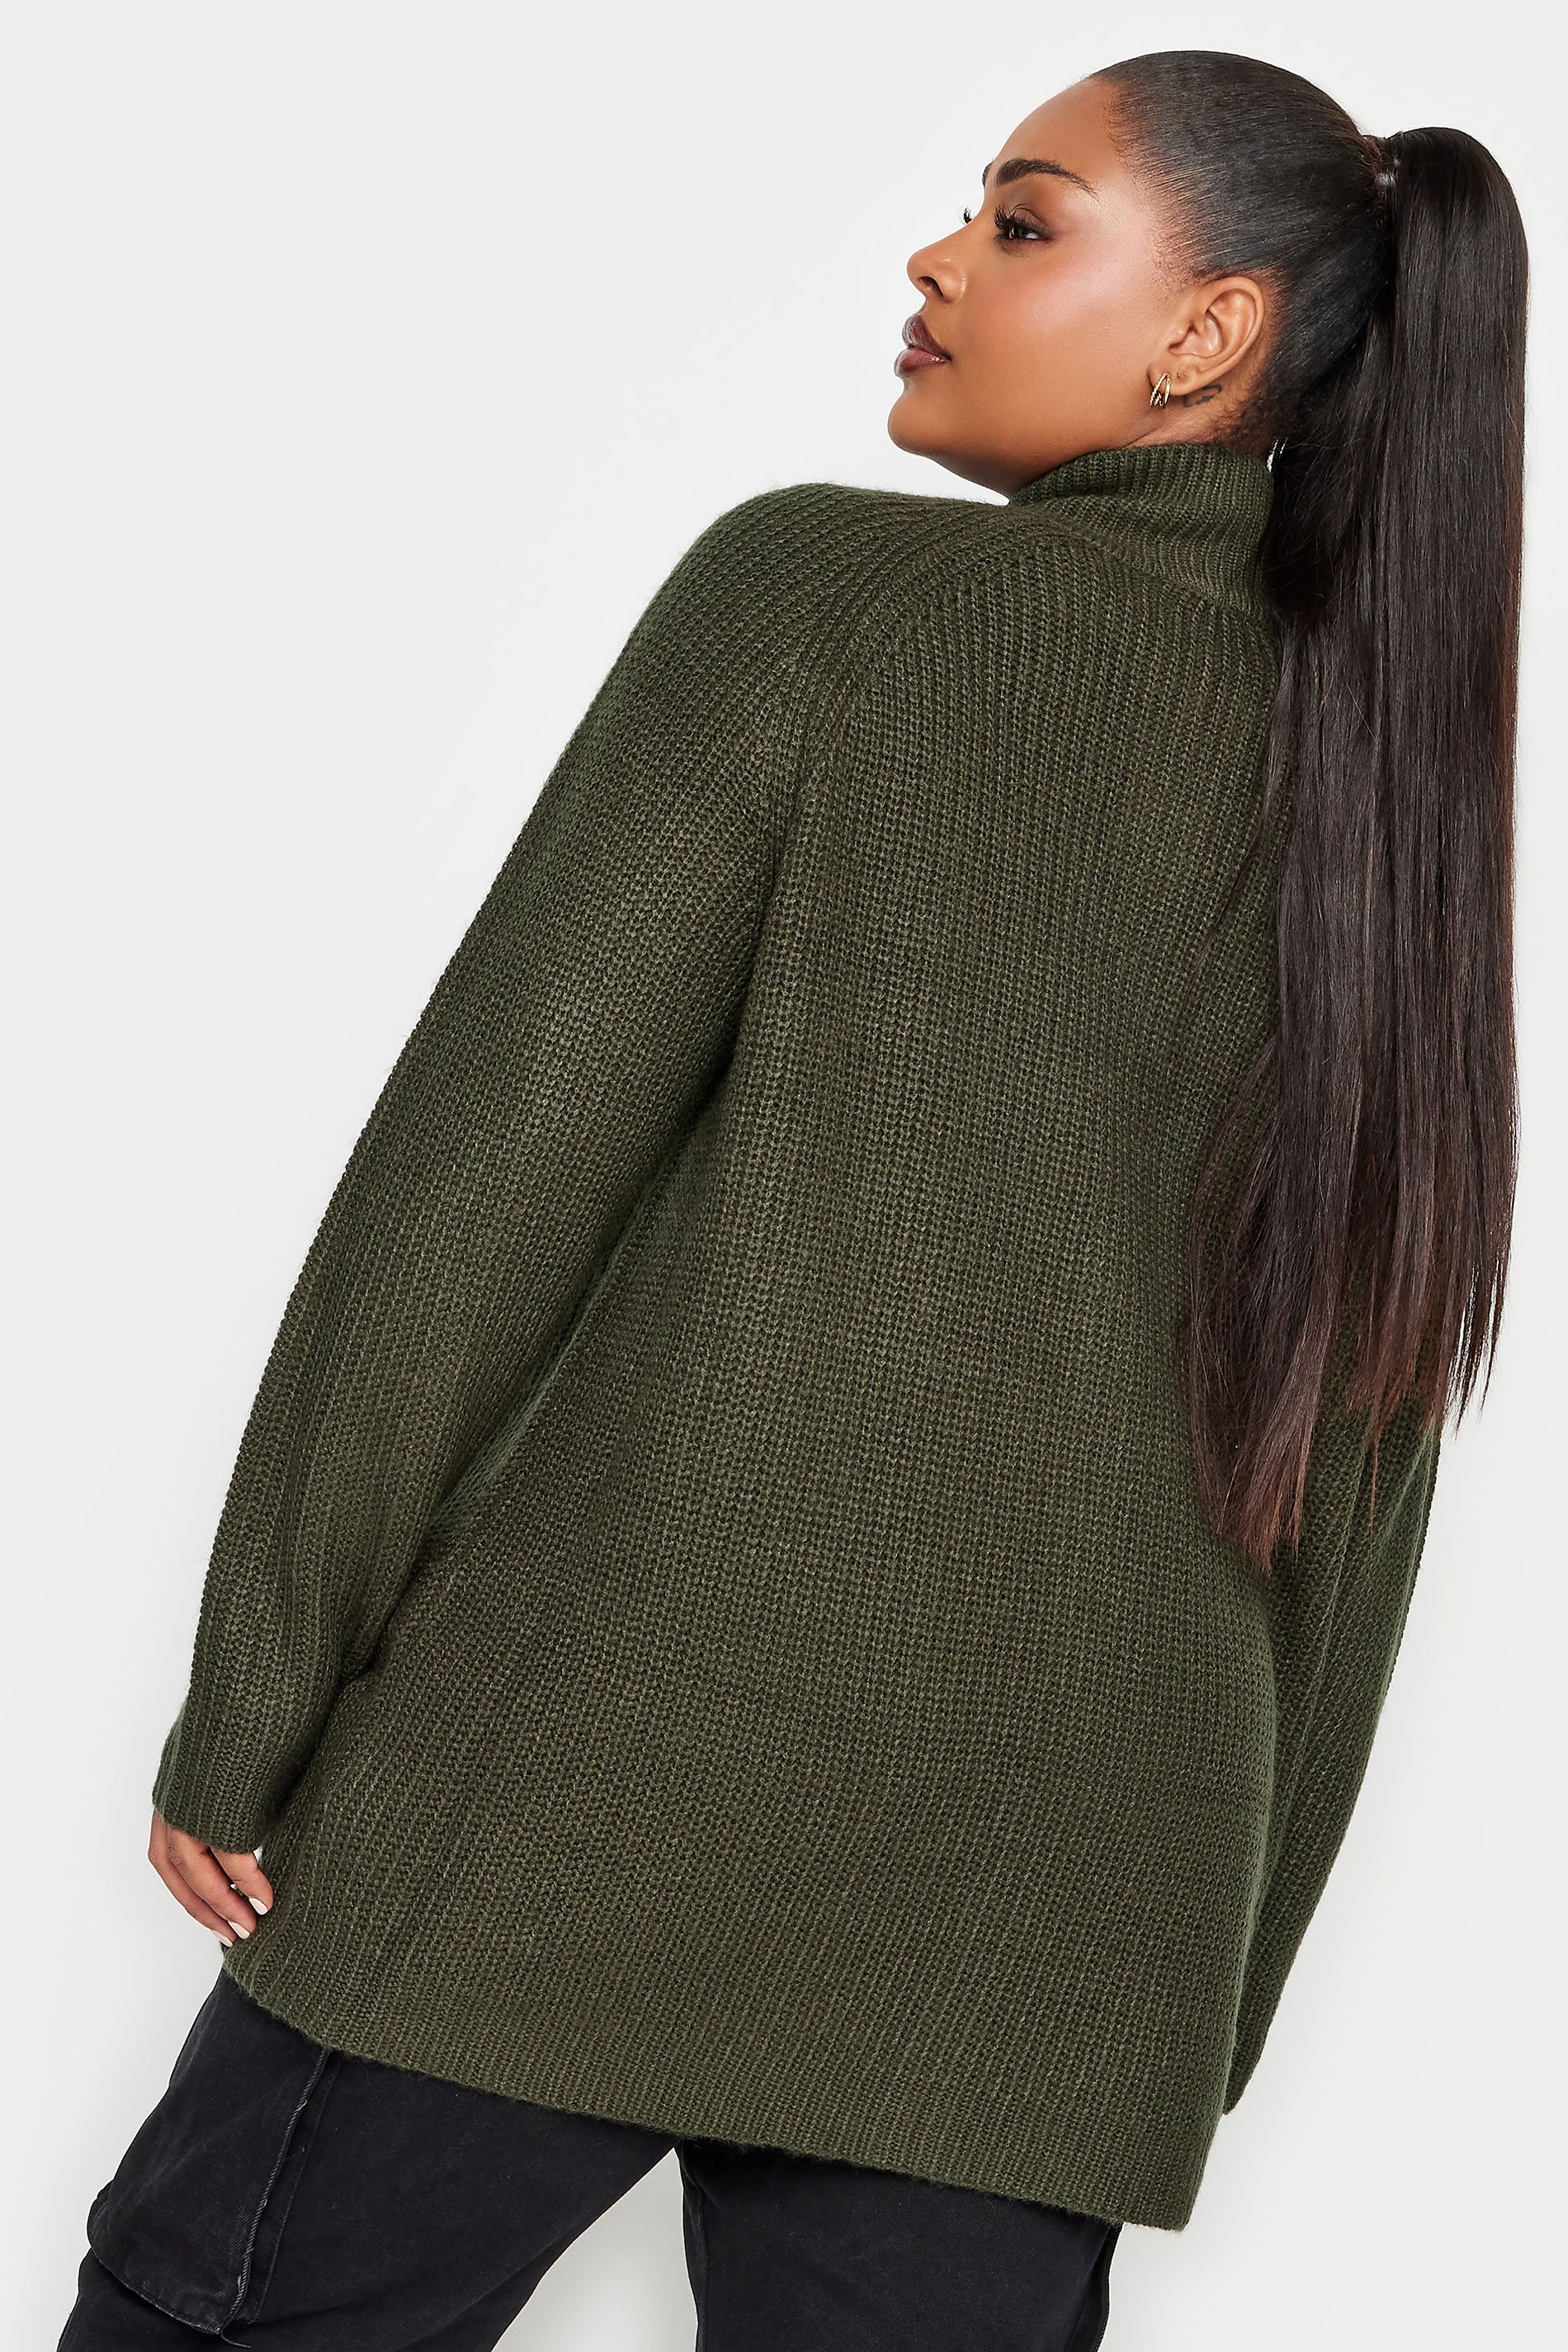 YOURS Plus Size Khaki Green Zip Through Cardigan | Yours Clothing 3